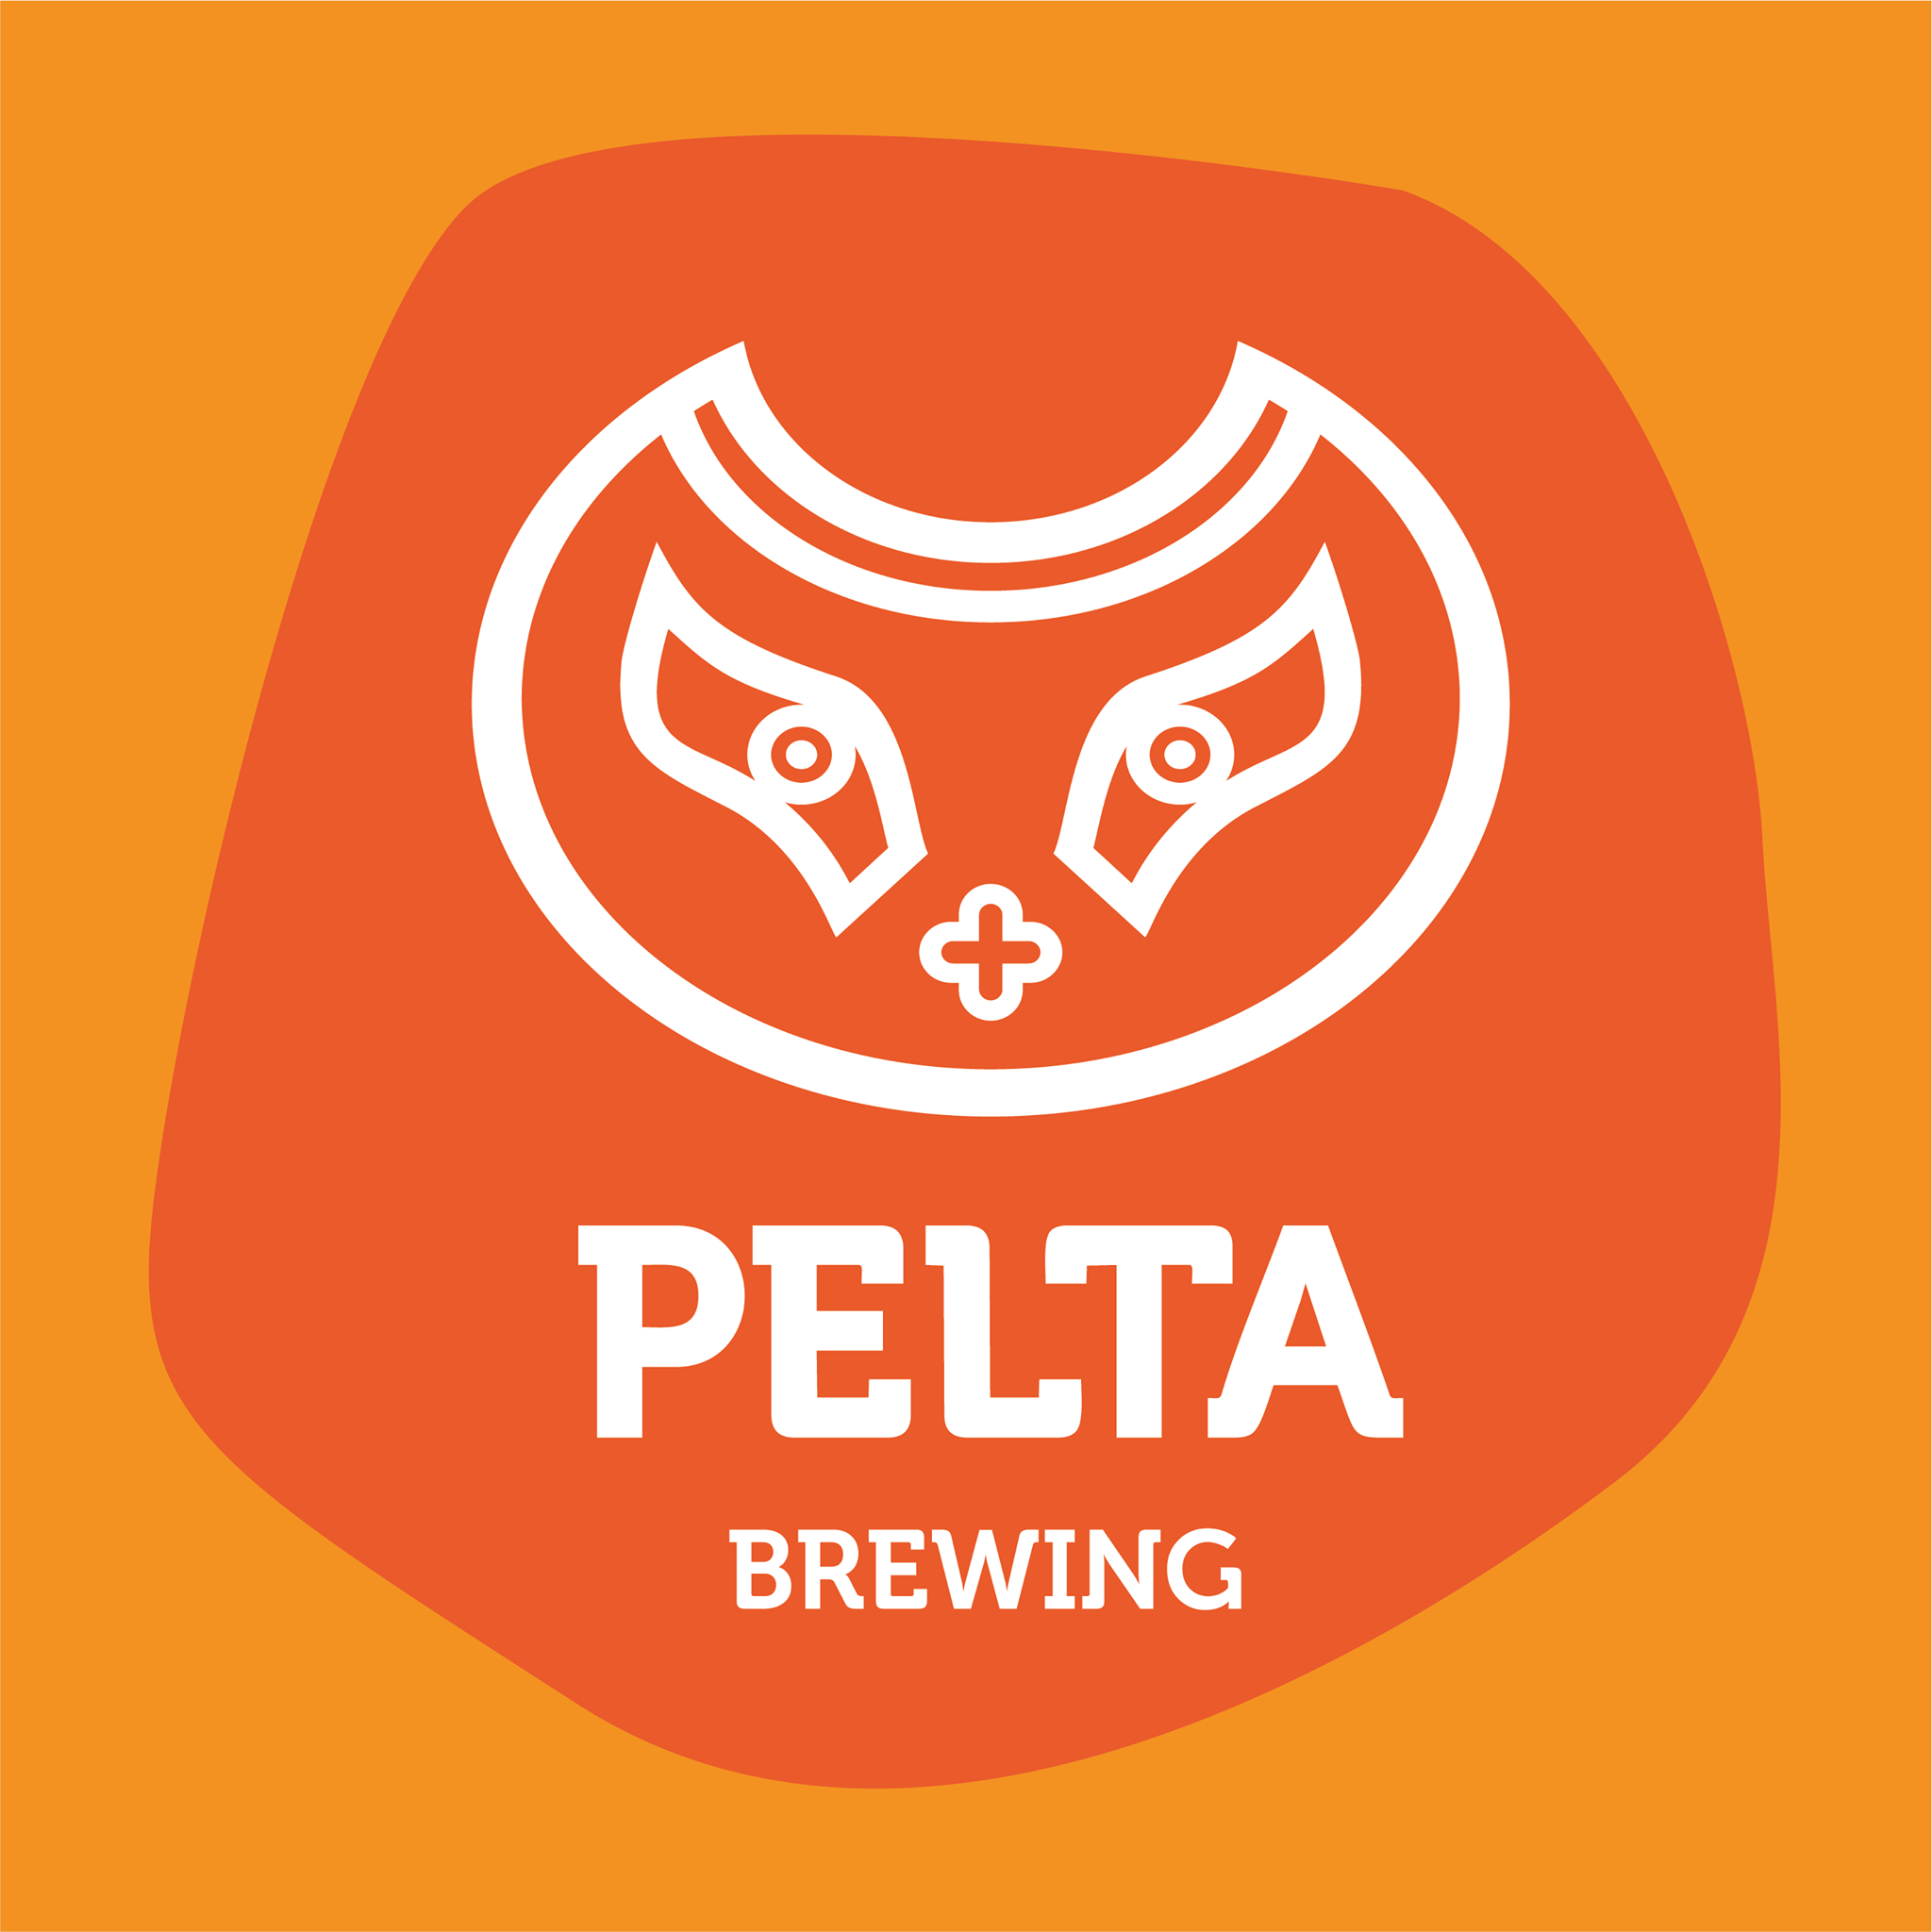 Pelta Brewing